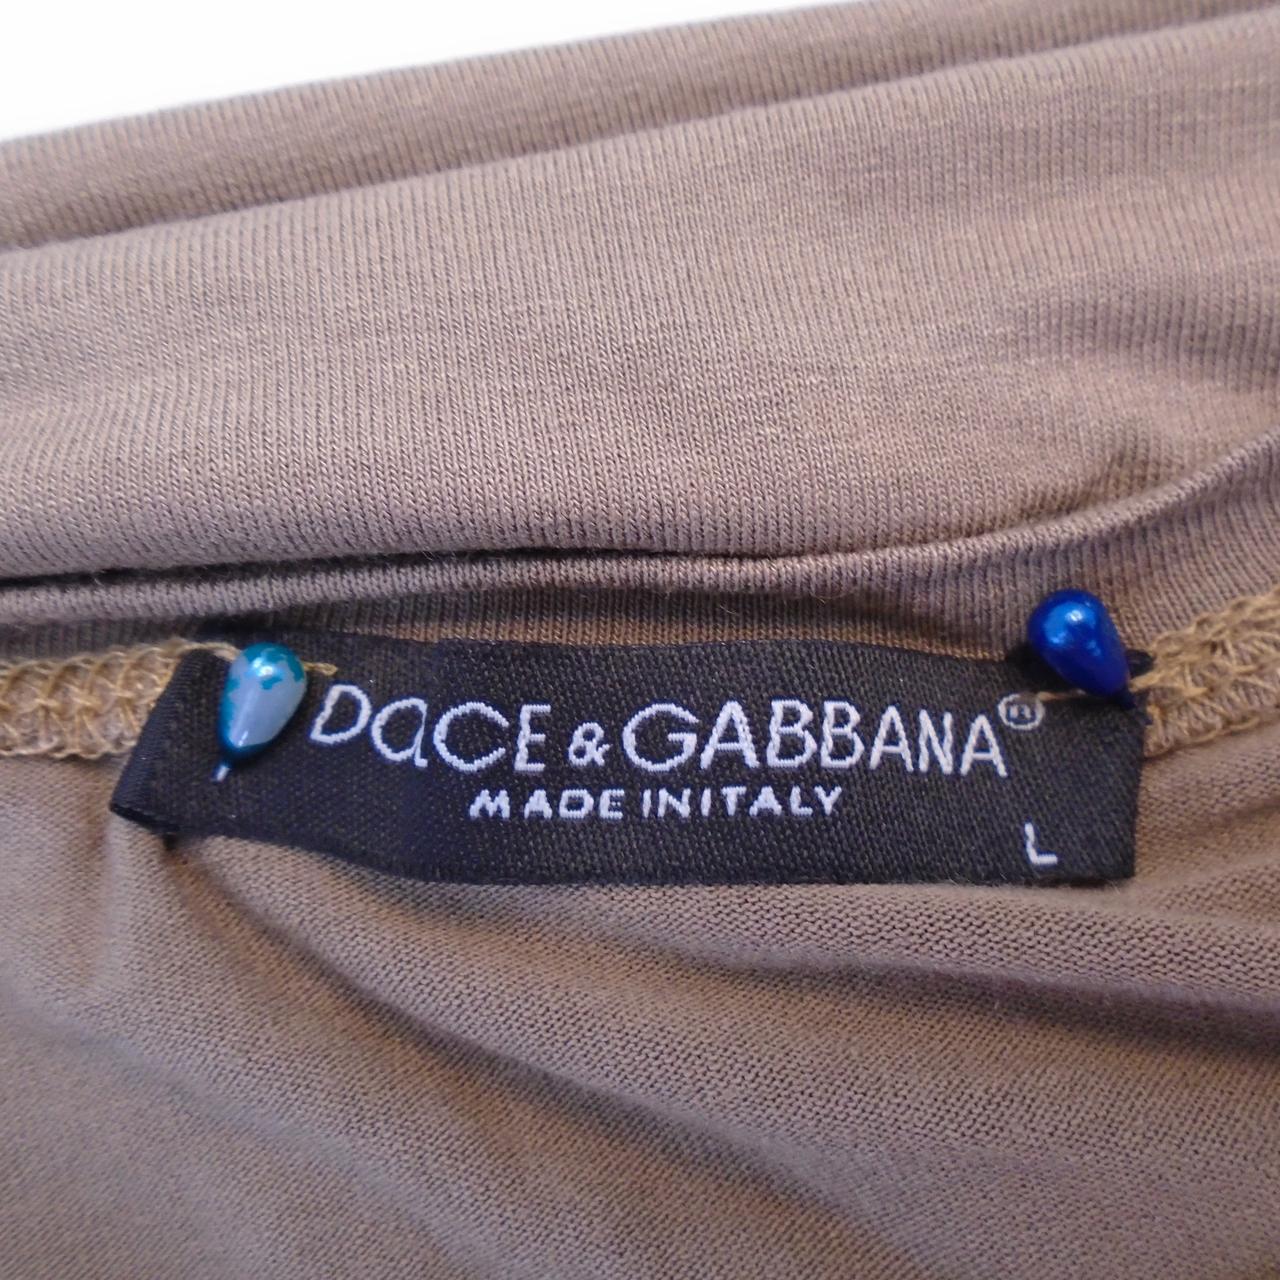 Maglietta da donna Dolce & Gabbana.  Marrone.  L. Usato.  Bene